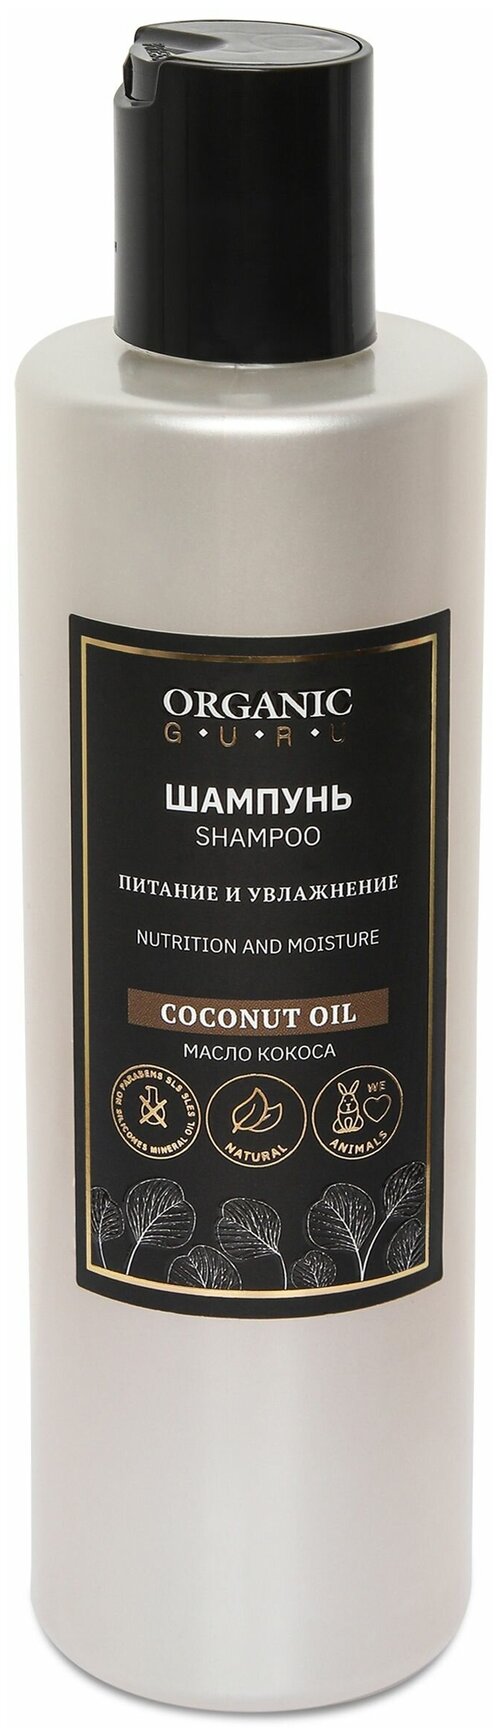 Шампунь Organic Guru Масло Кокоса COCONUT OIL,250 мл.